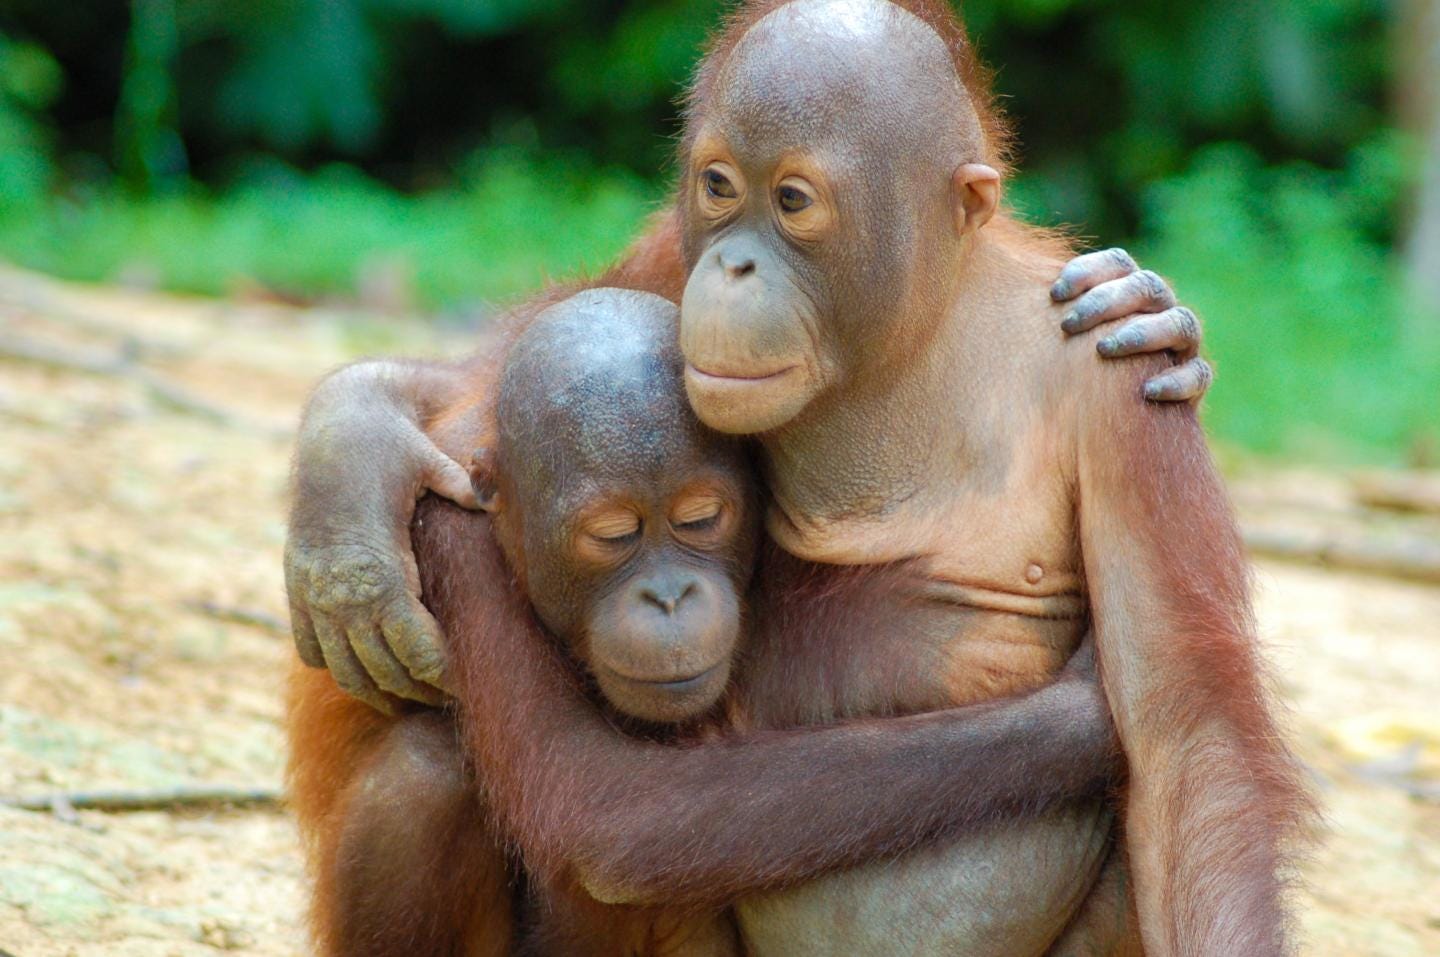 Image result for orangutan